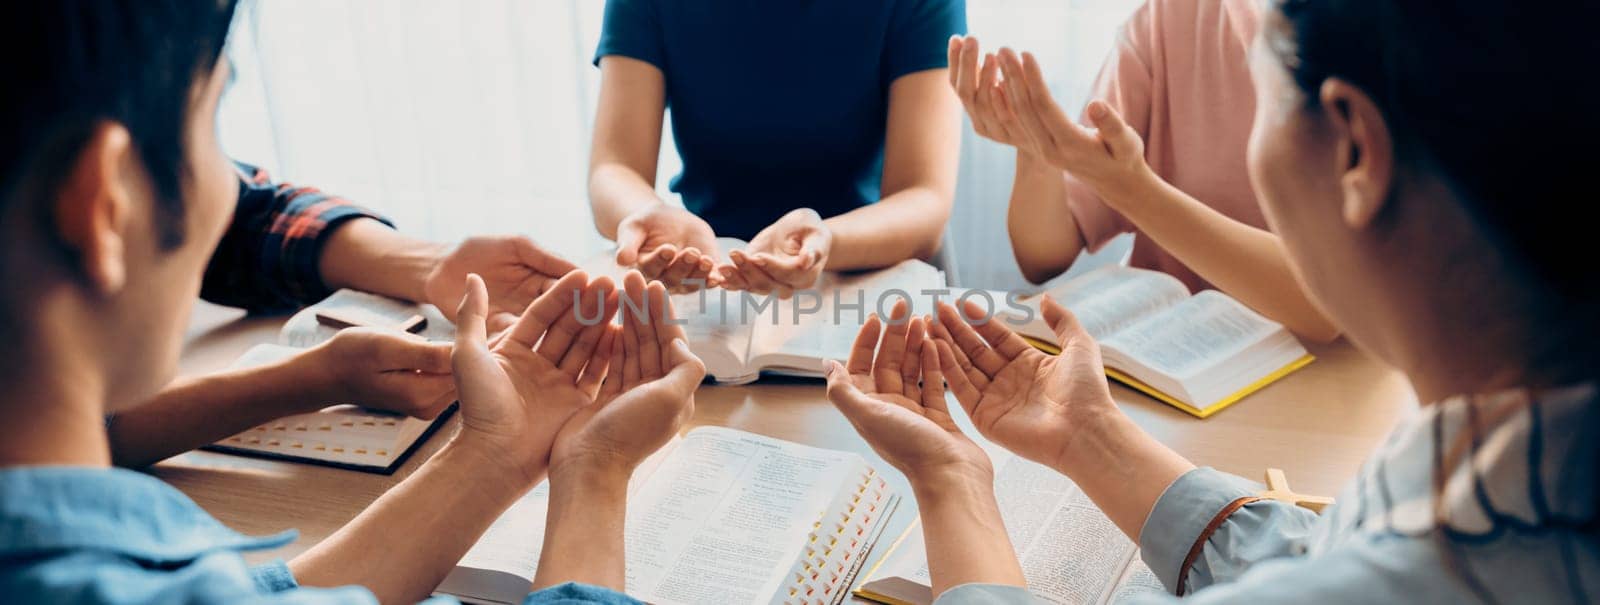 Diversity people hand praying faithfully together on bible book. Burgeoning. by biancoblue